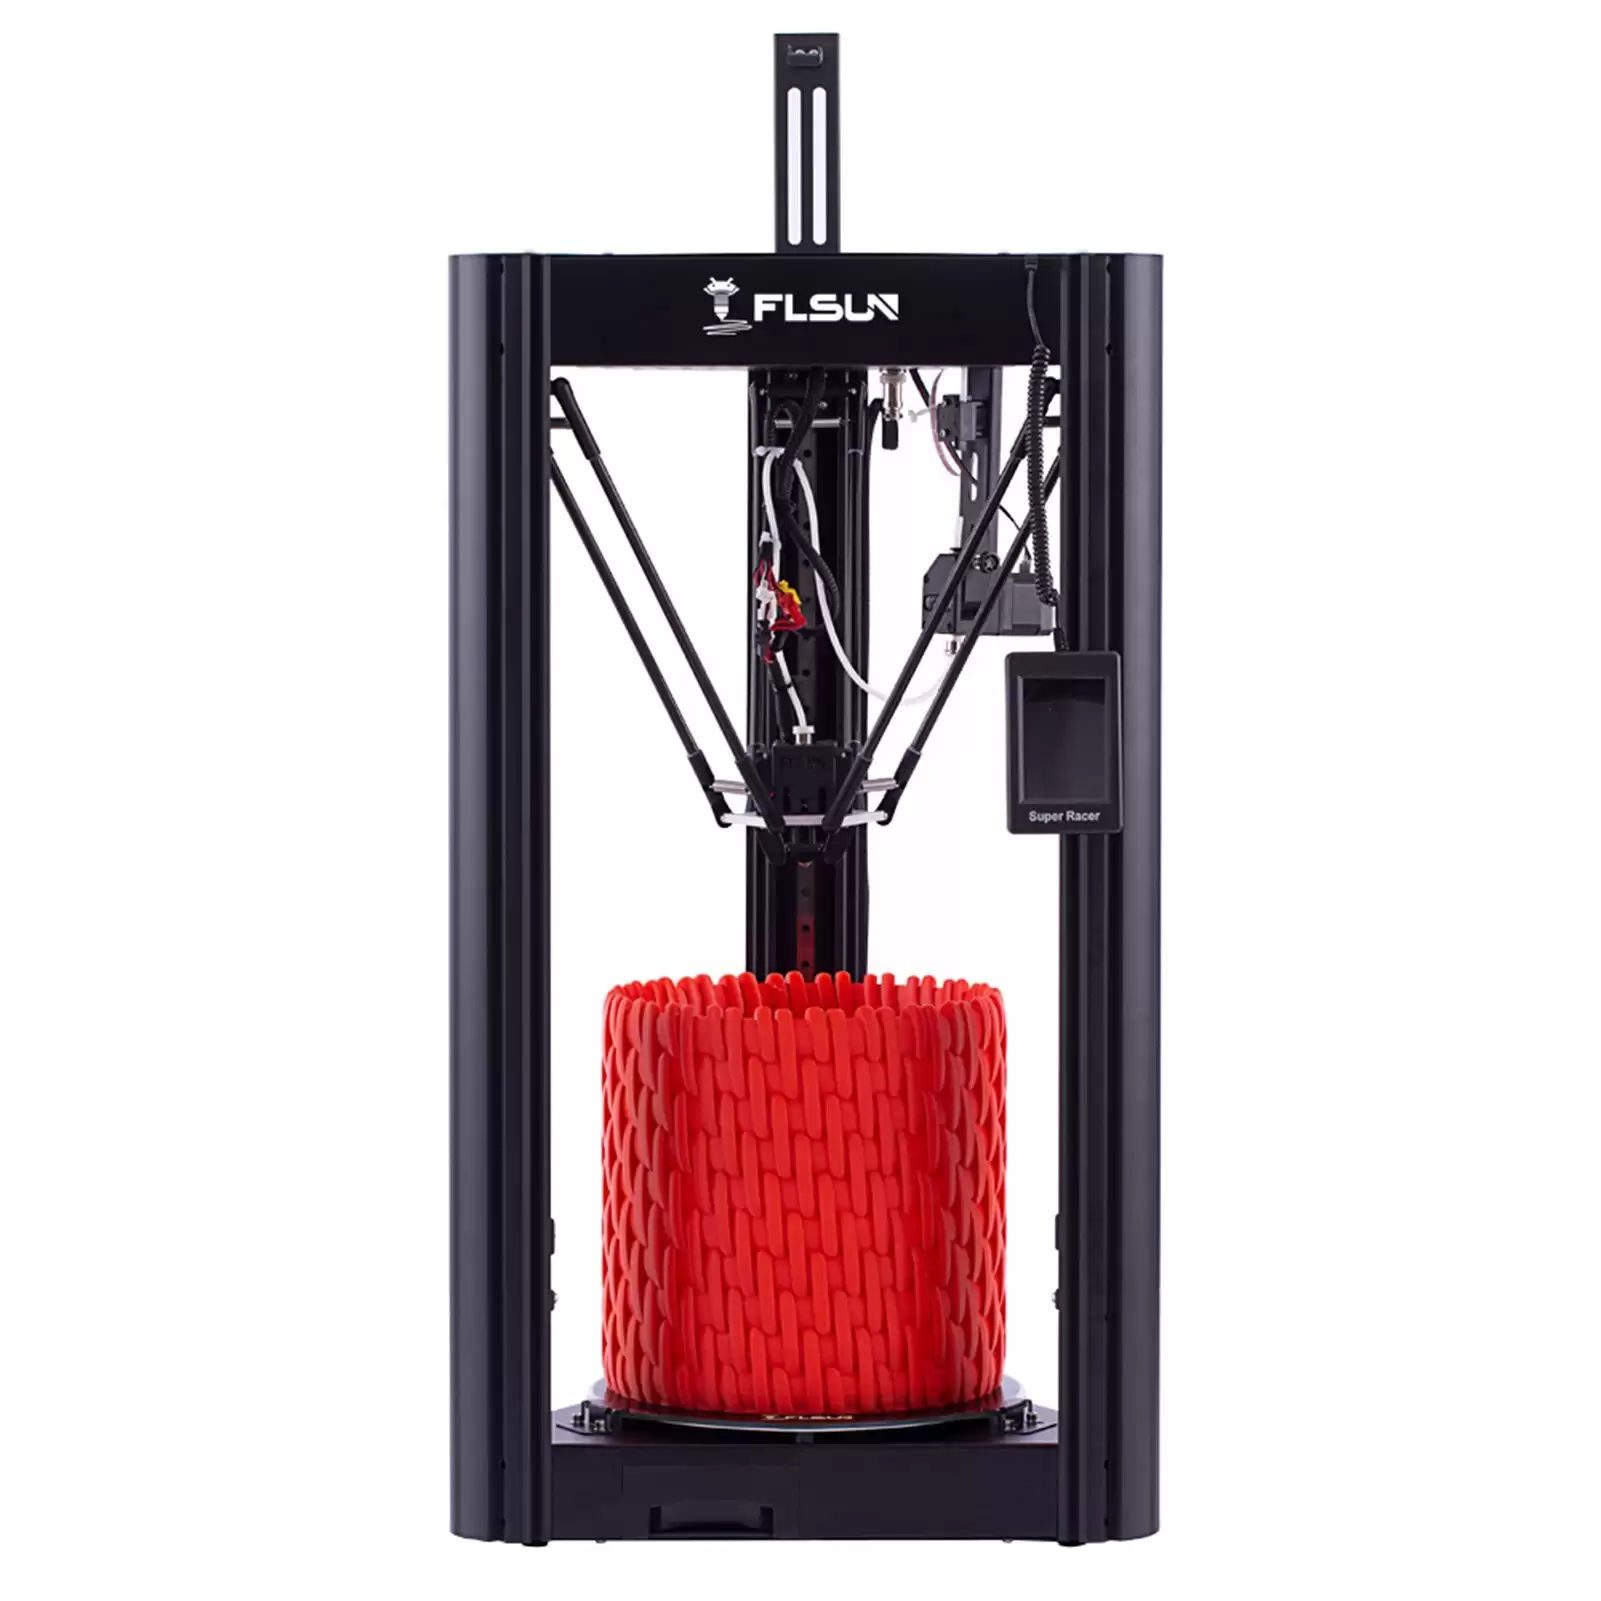 Order In Just $419.99 [Eu Warehouse] Flsun Sr Delta 3d Printer With 200g Pla Sample Filament At Tomtop